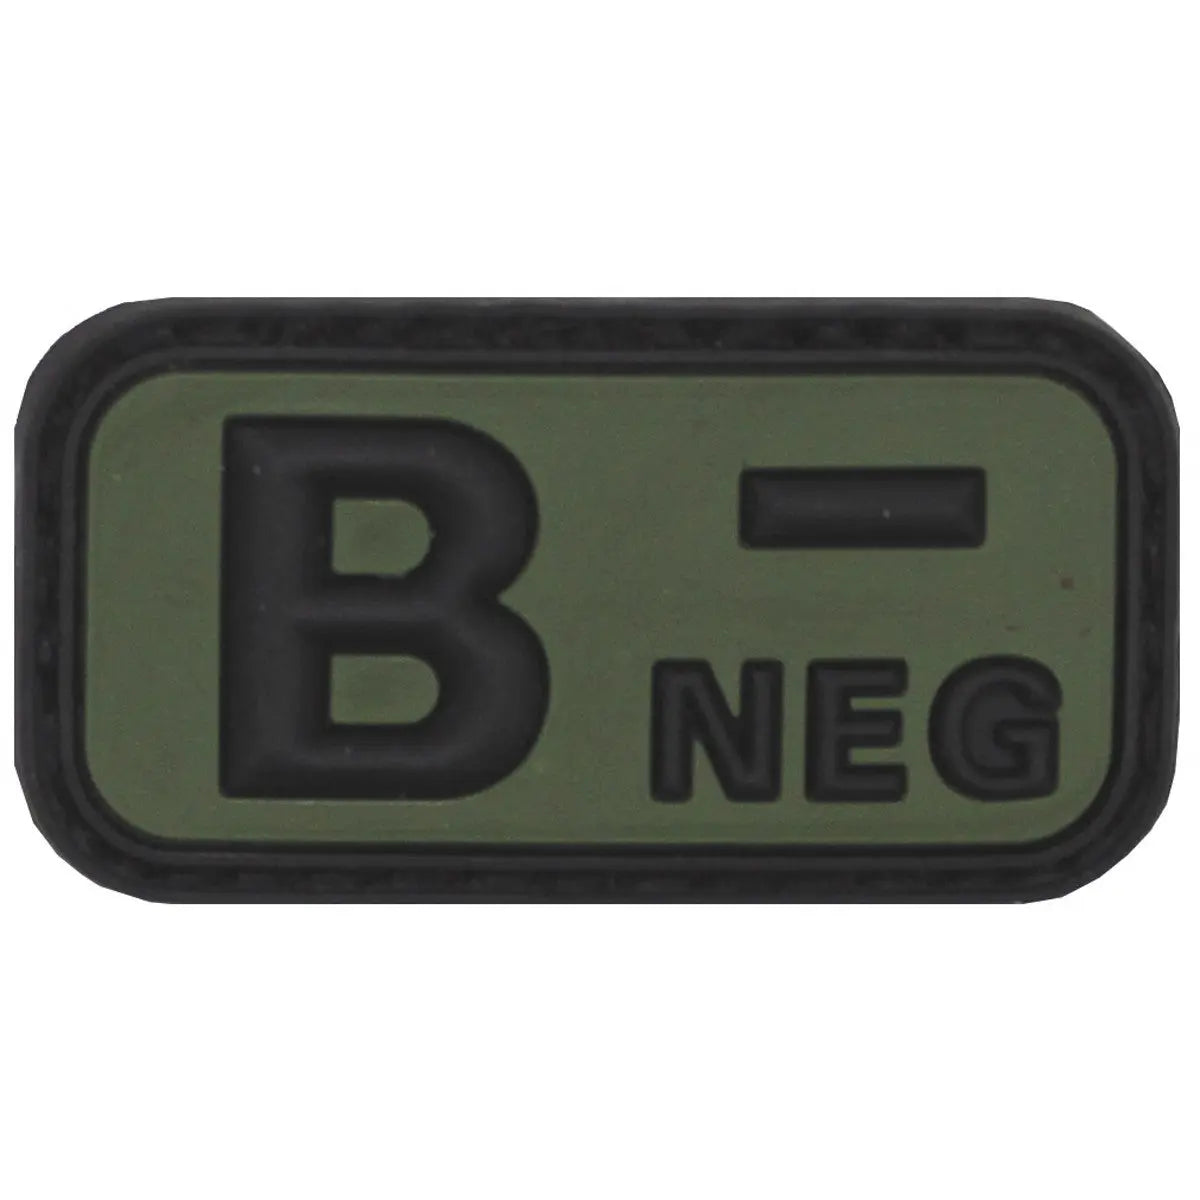 Velcro Patch, black-OD green, blood group "B NEG", 3D NSO Gear